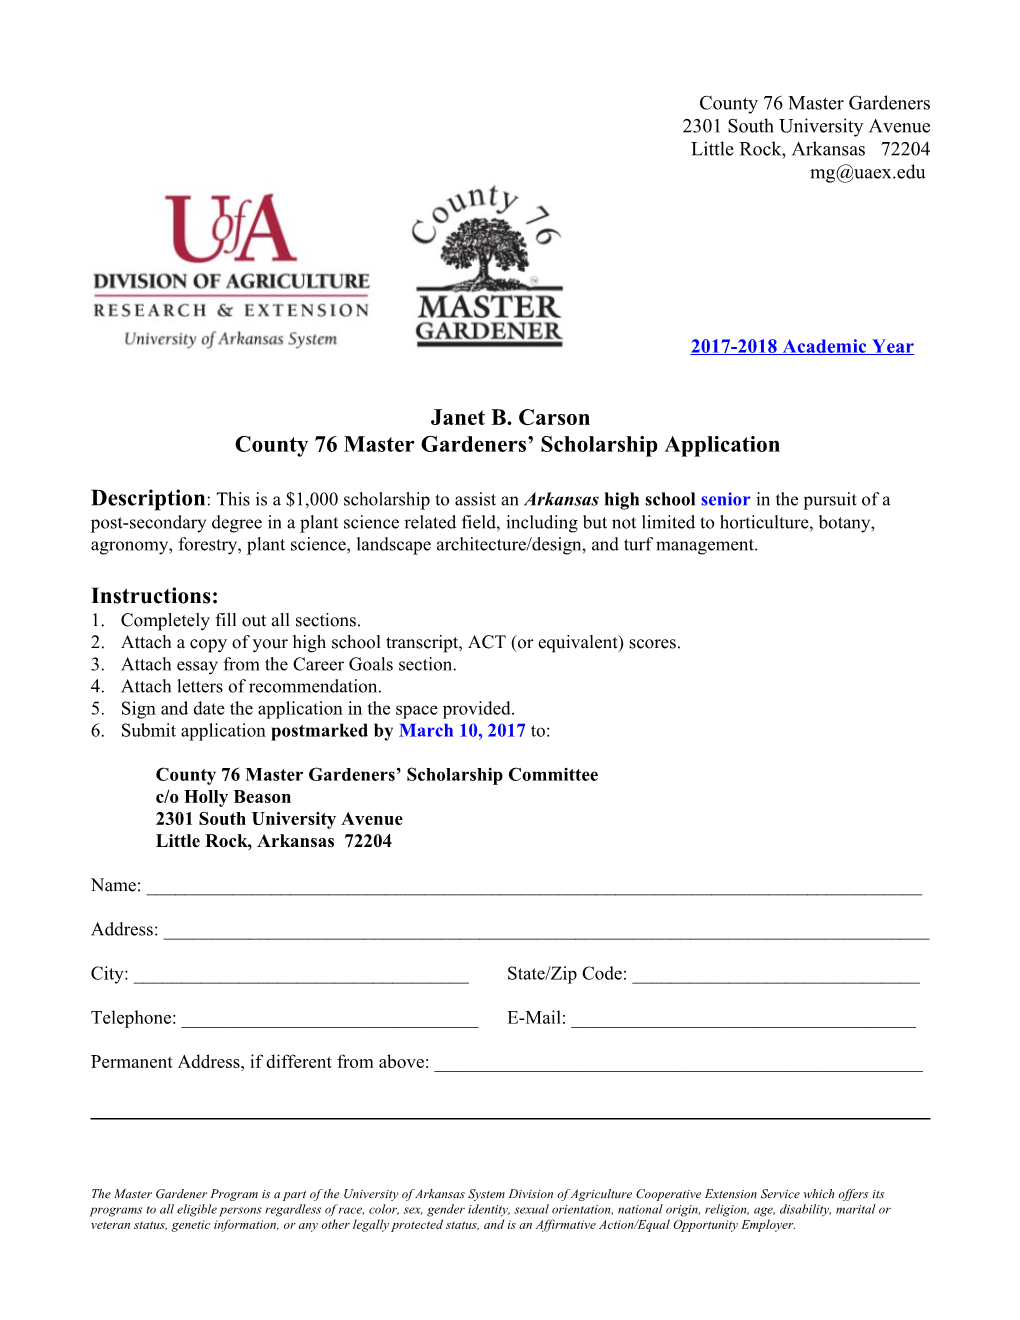 County 76 Master Gardeners Scholarship Application